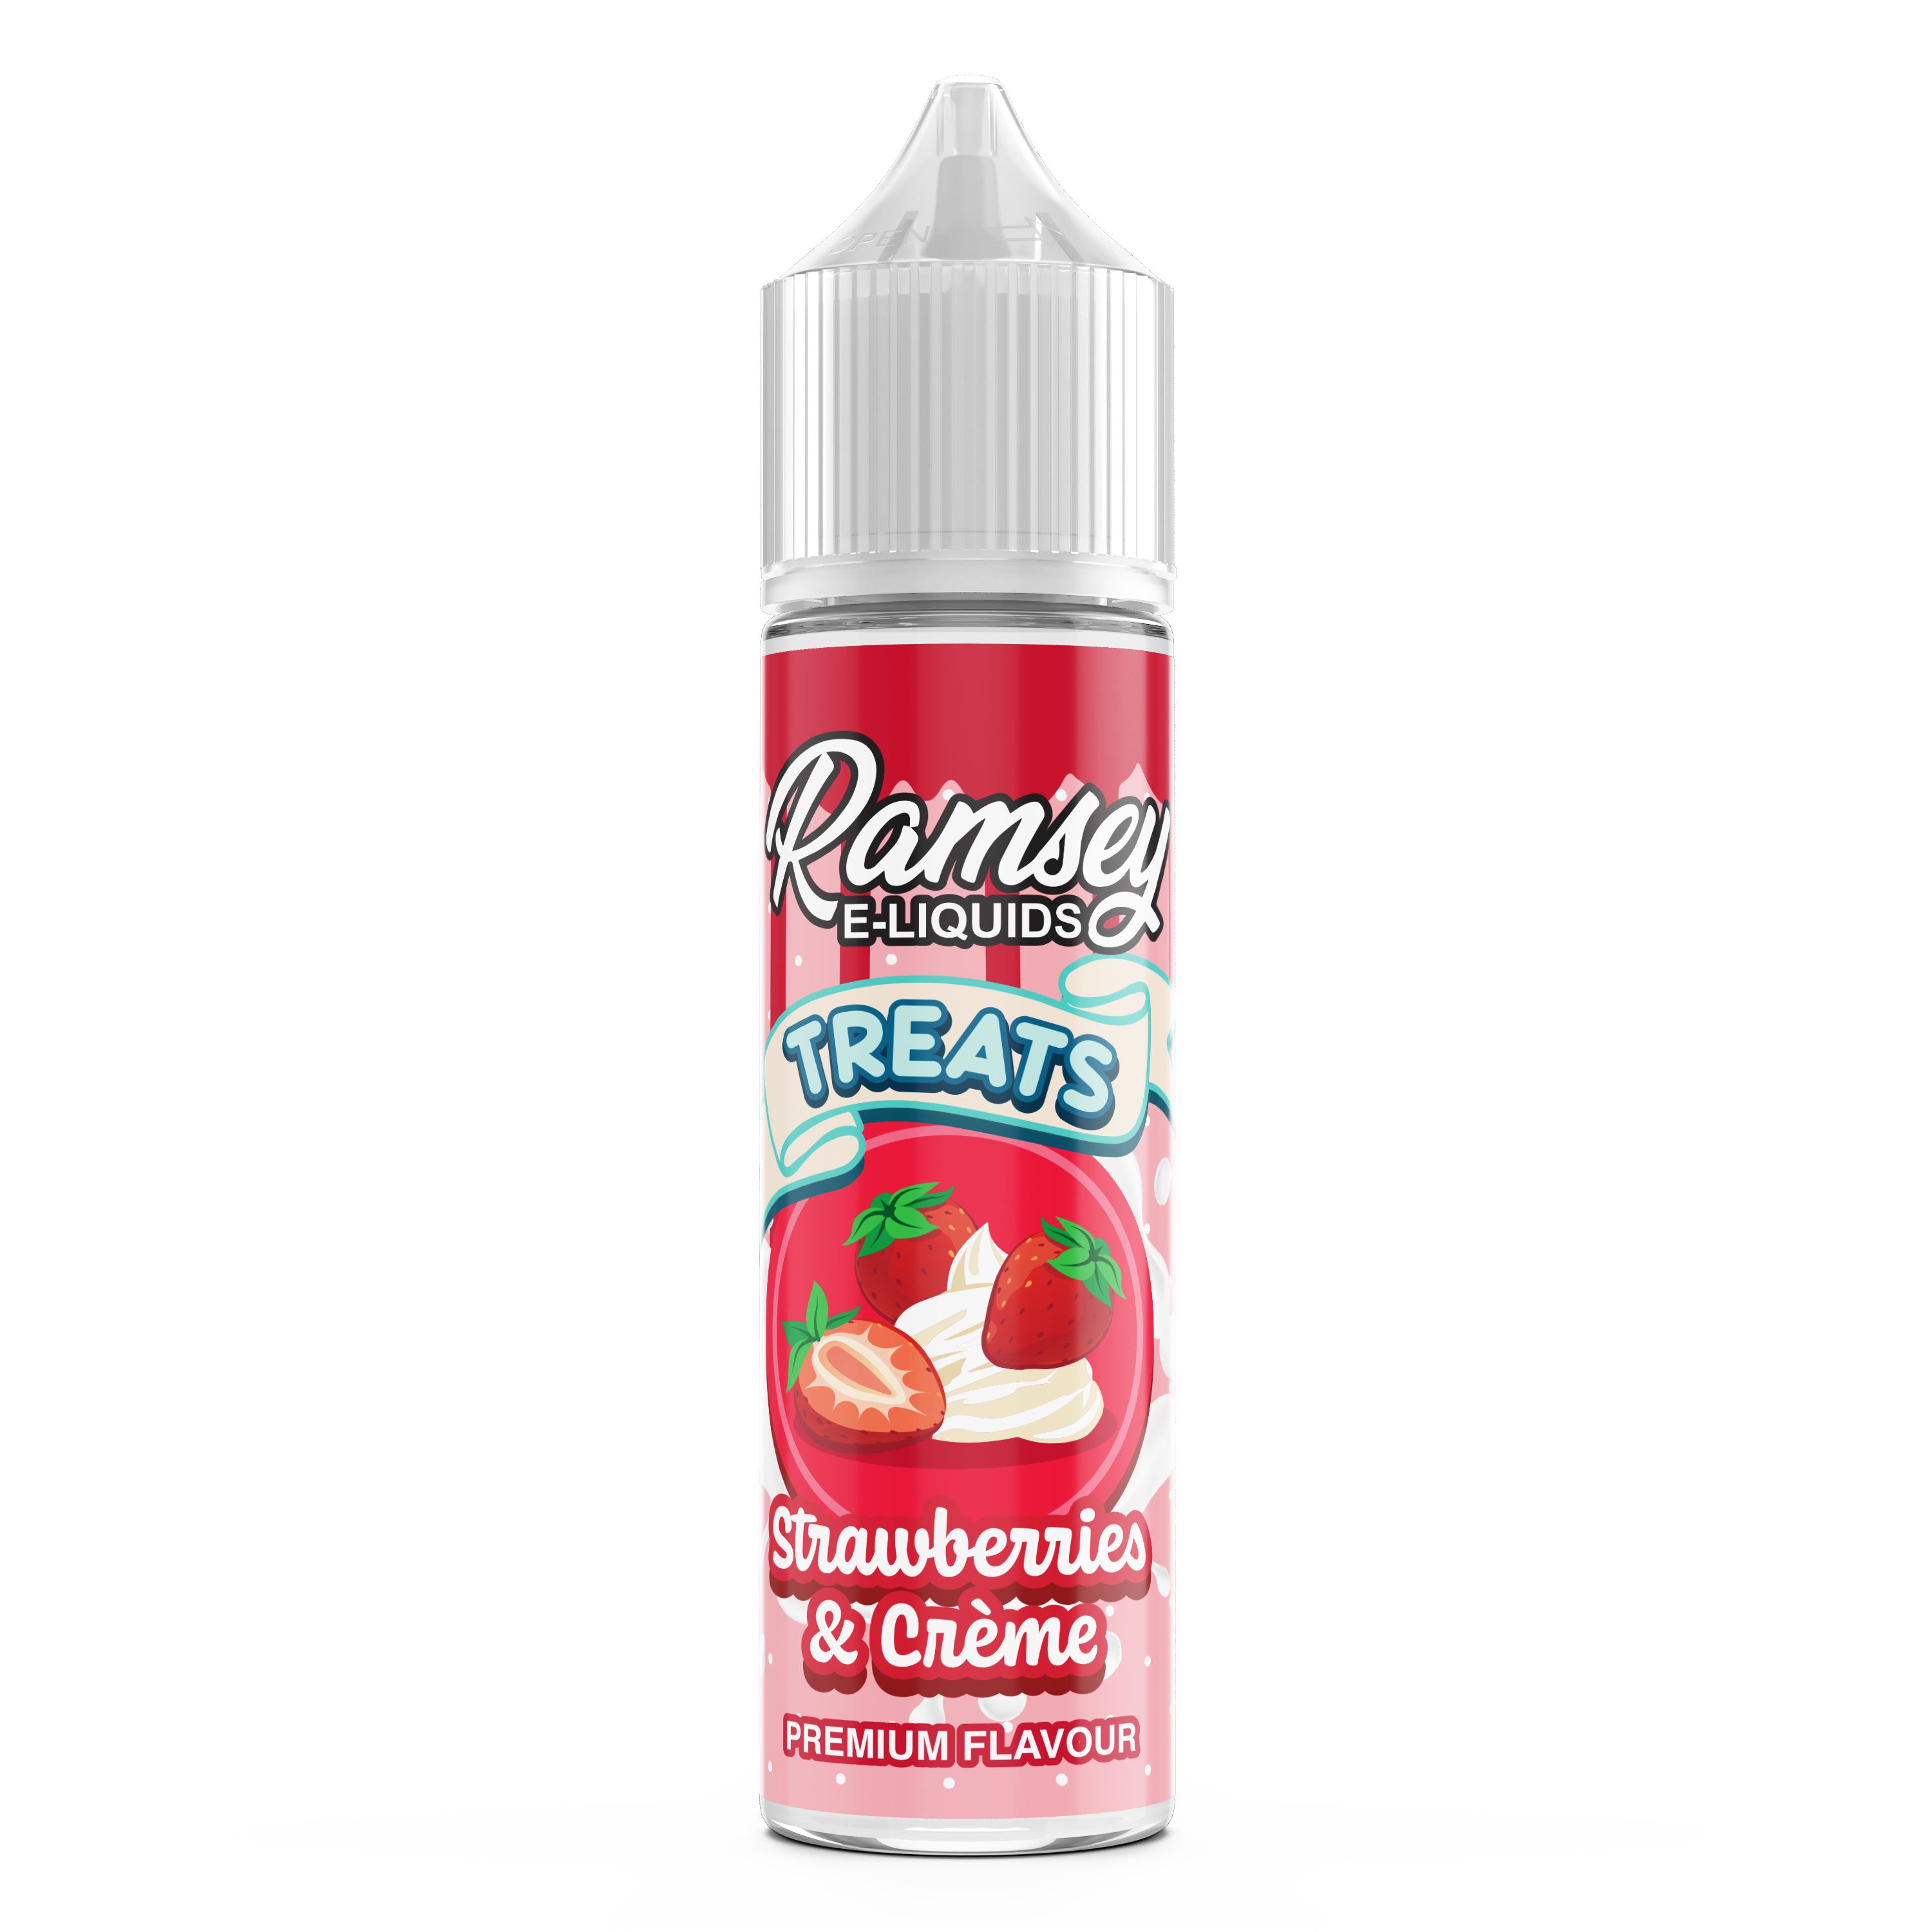 Ramsey E-Liquids Treats Strawberries Cream 0mg 50ml Short Fill E-Liquid